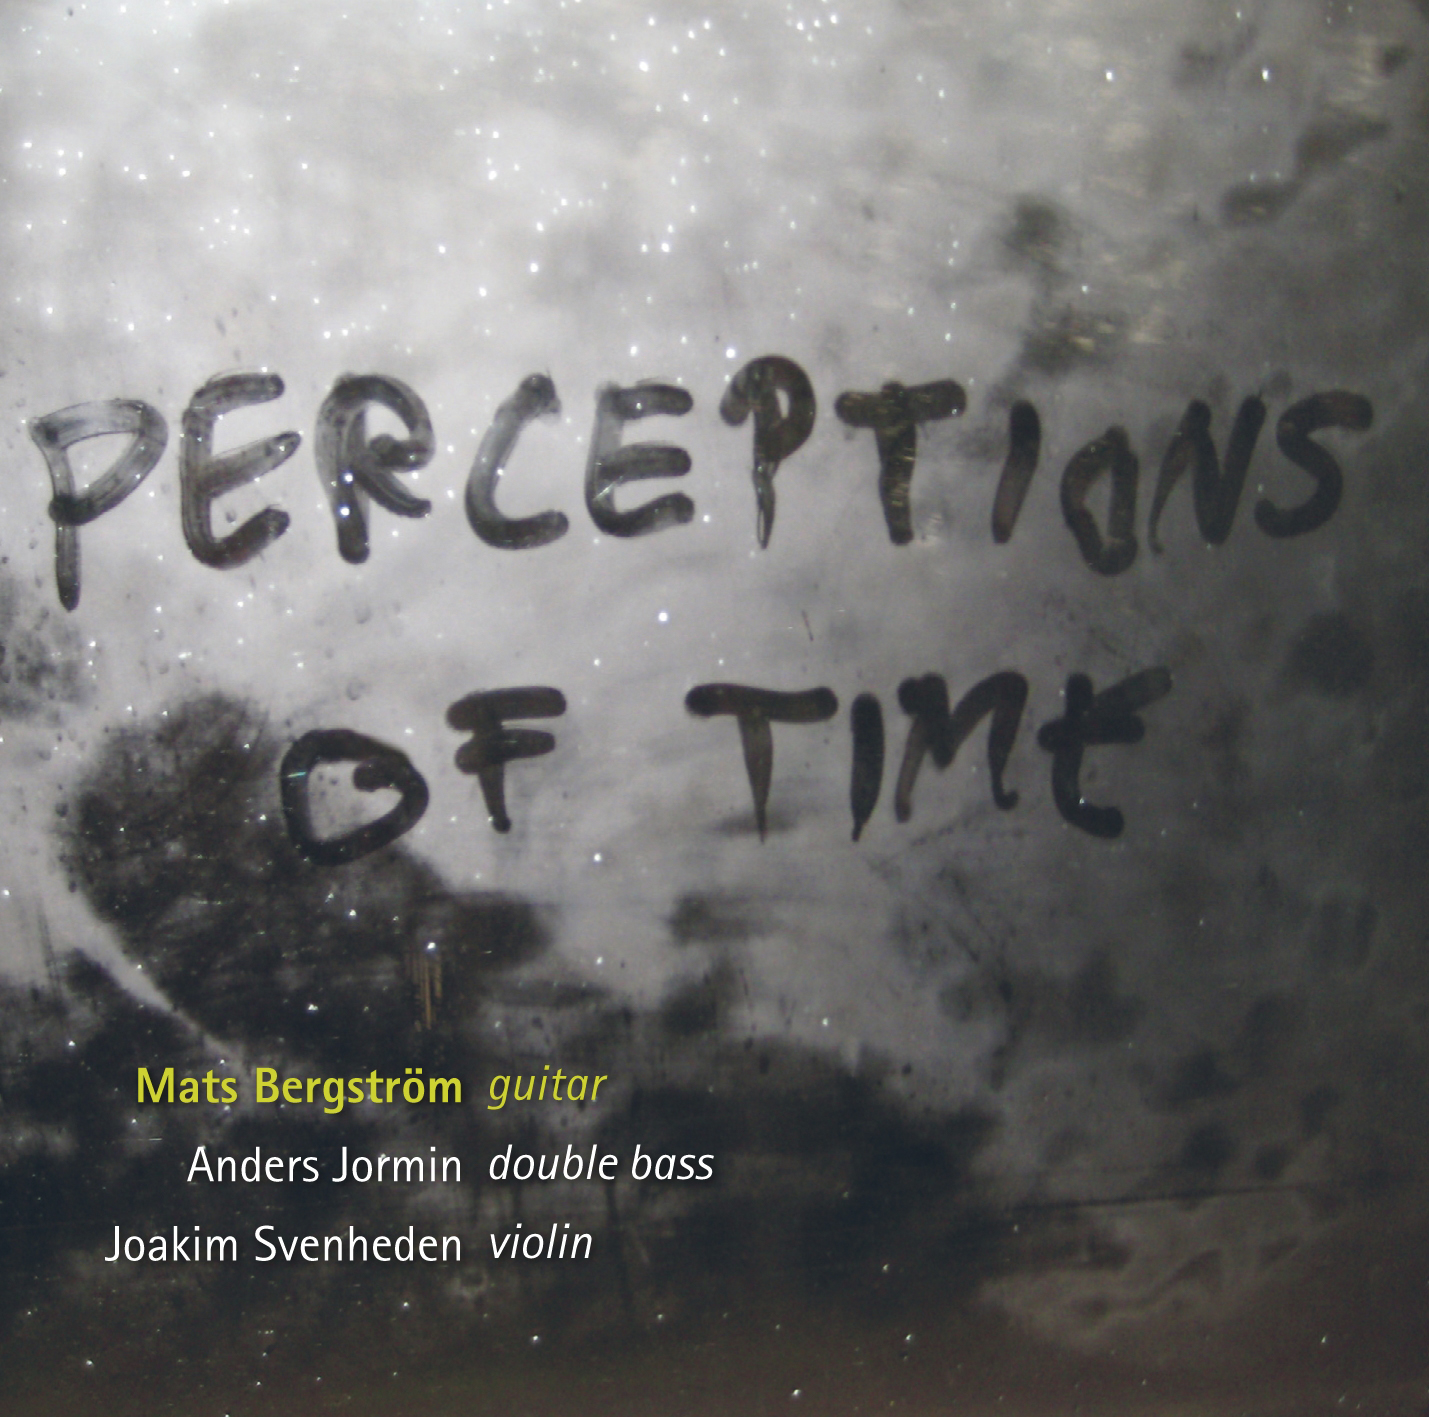 Mats Bergström: Perceptions of time